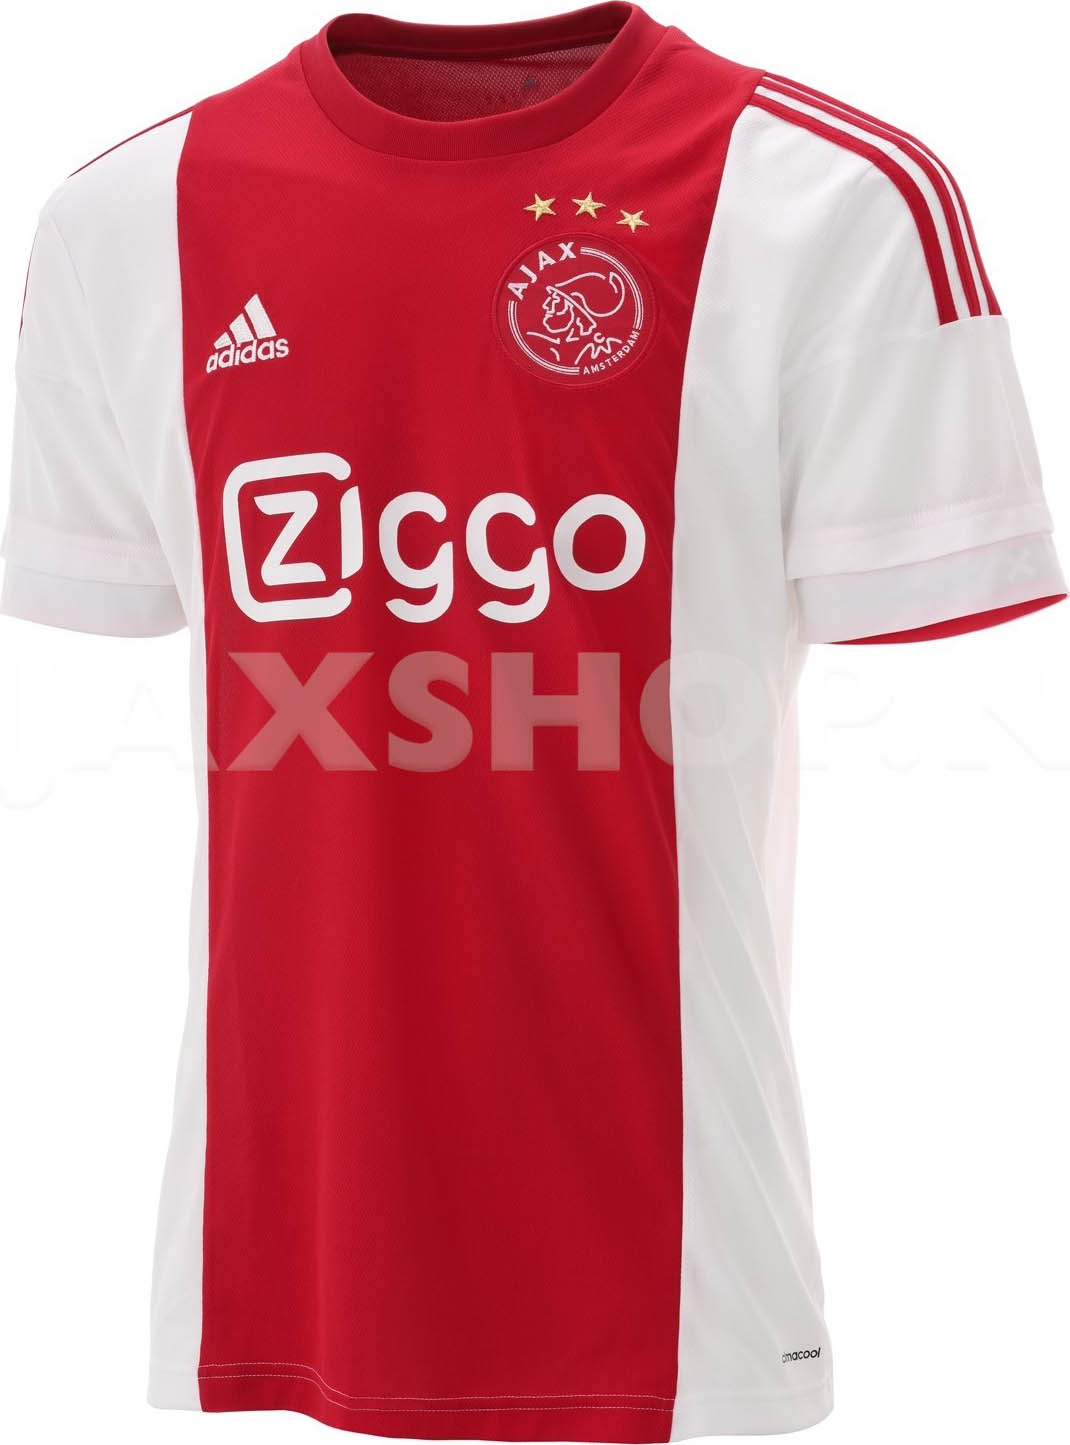 Ajax 15-16 Home and Away Kits Released - Footy Headlines